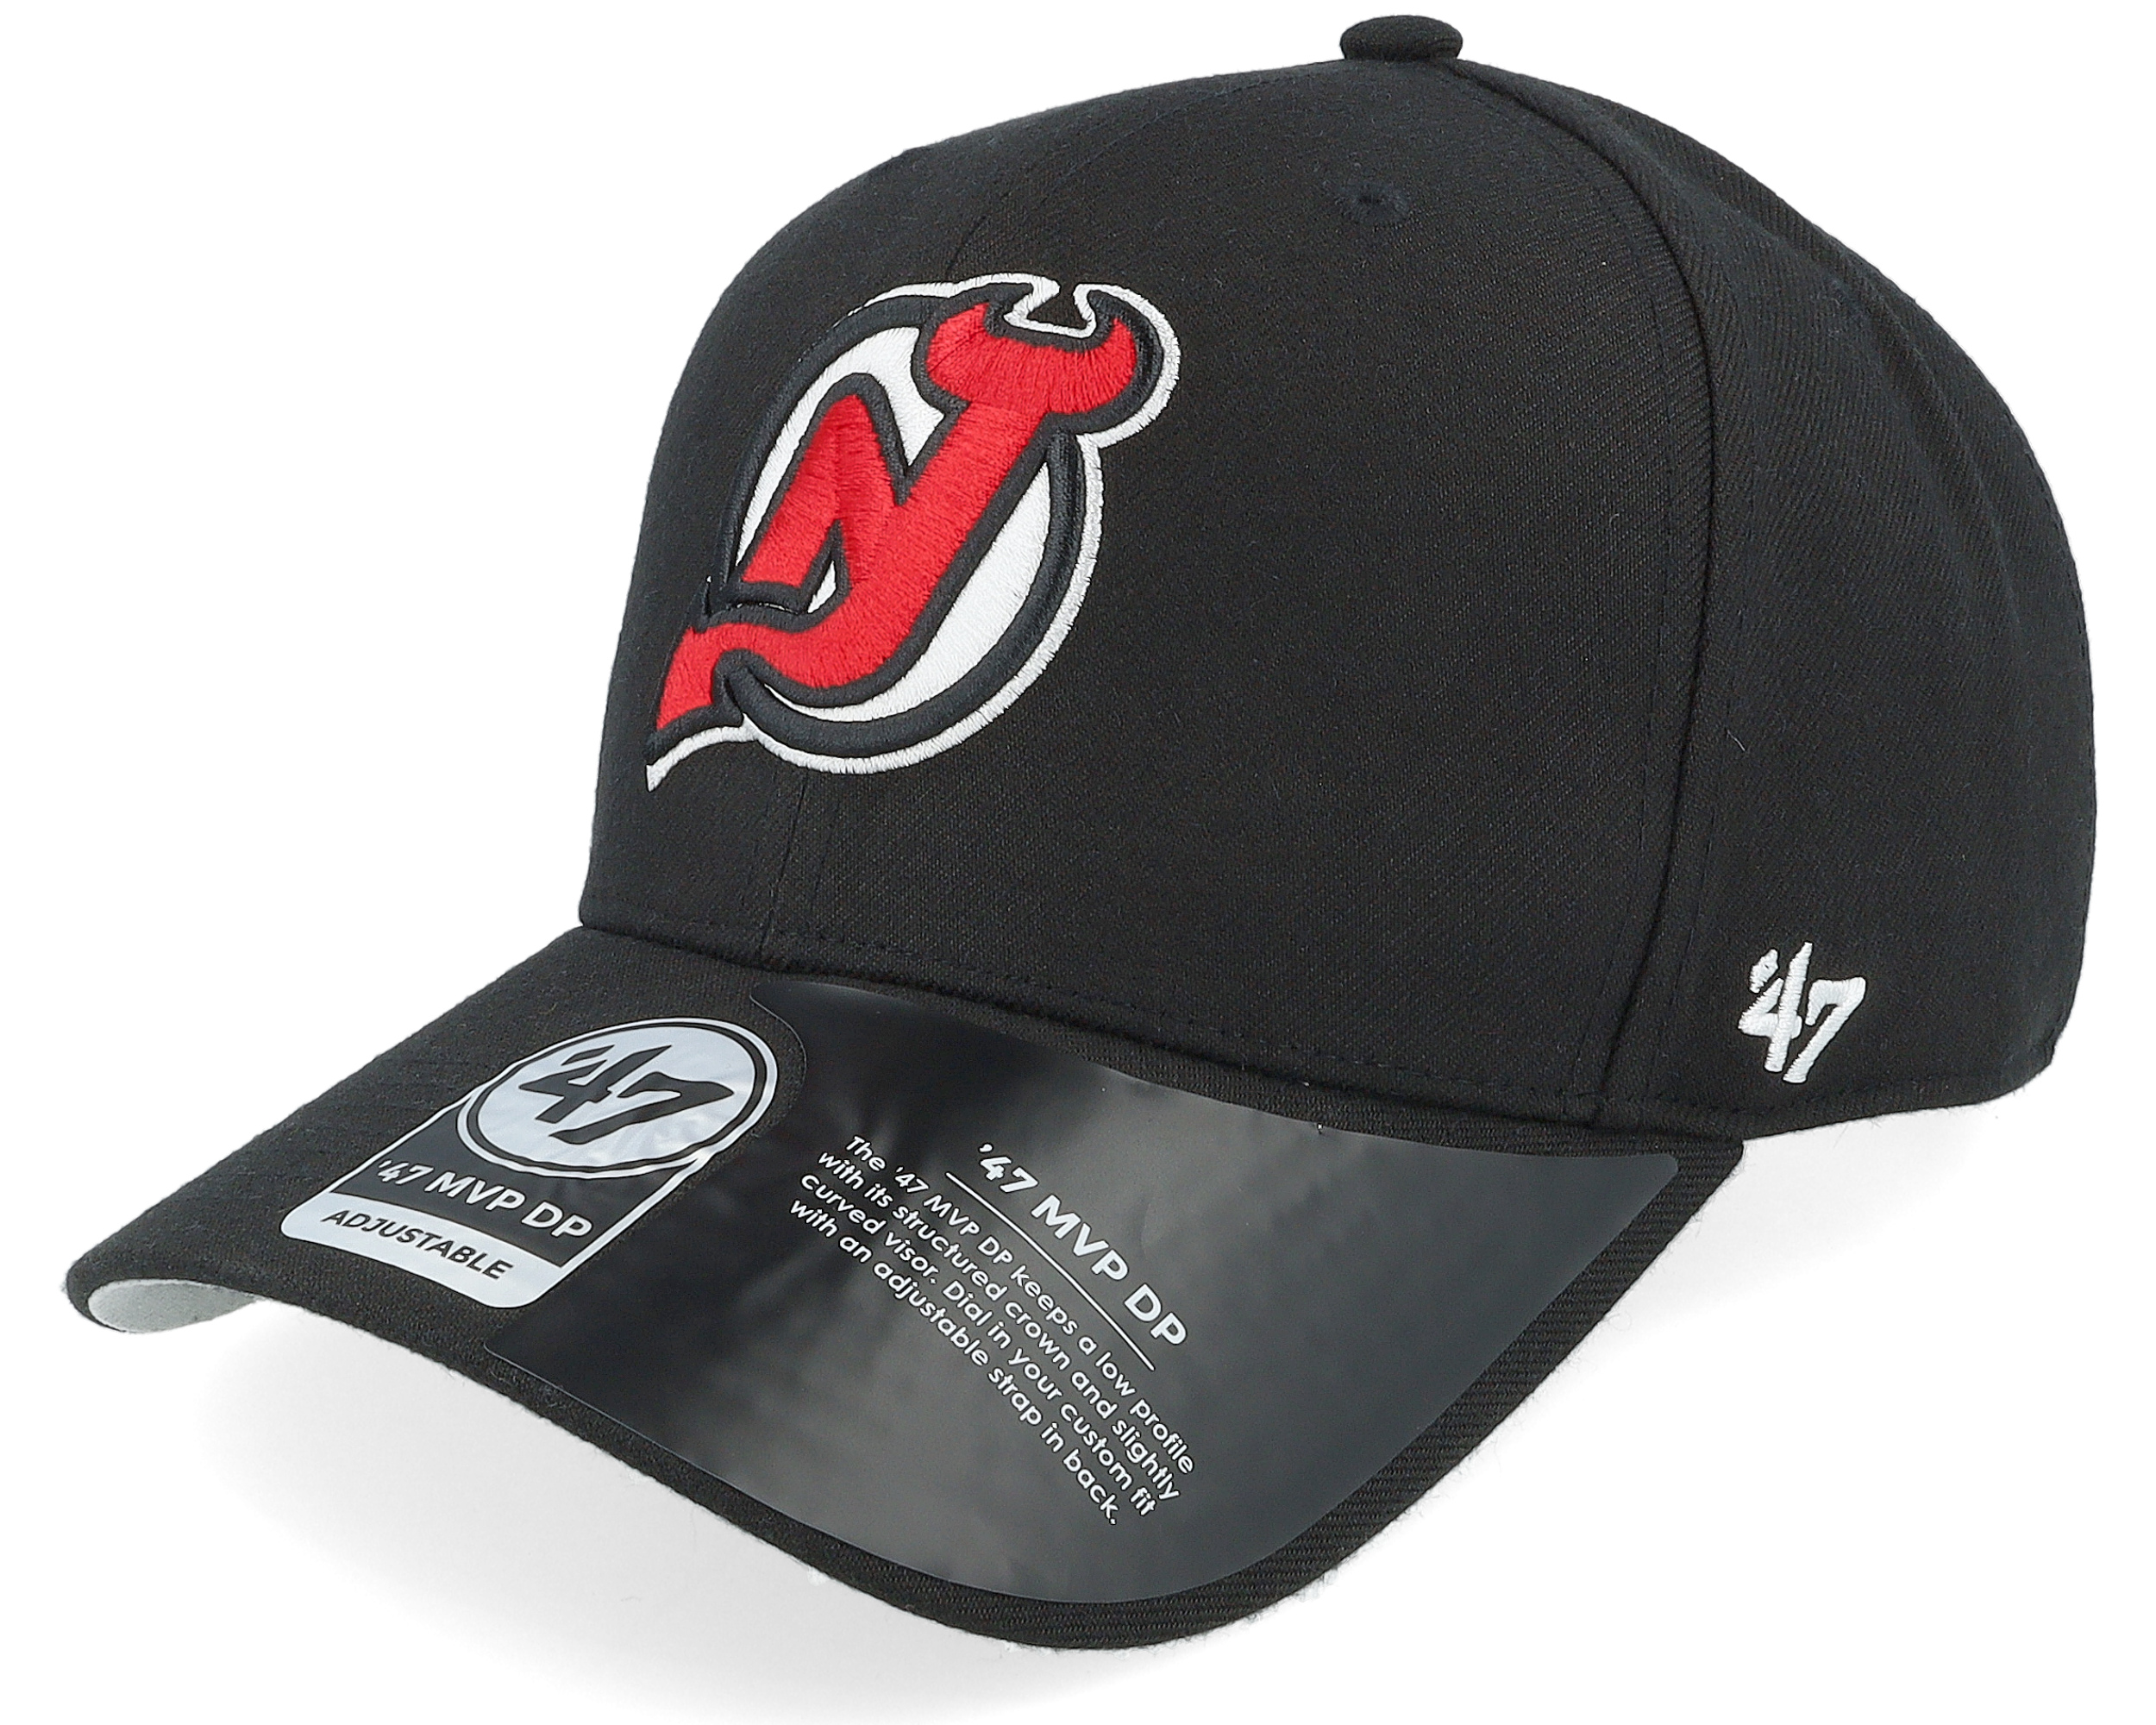 New Jersey Devils Red MVP Cap